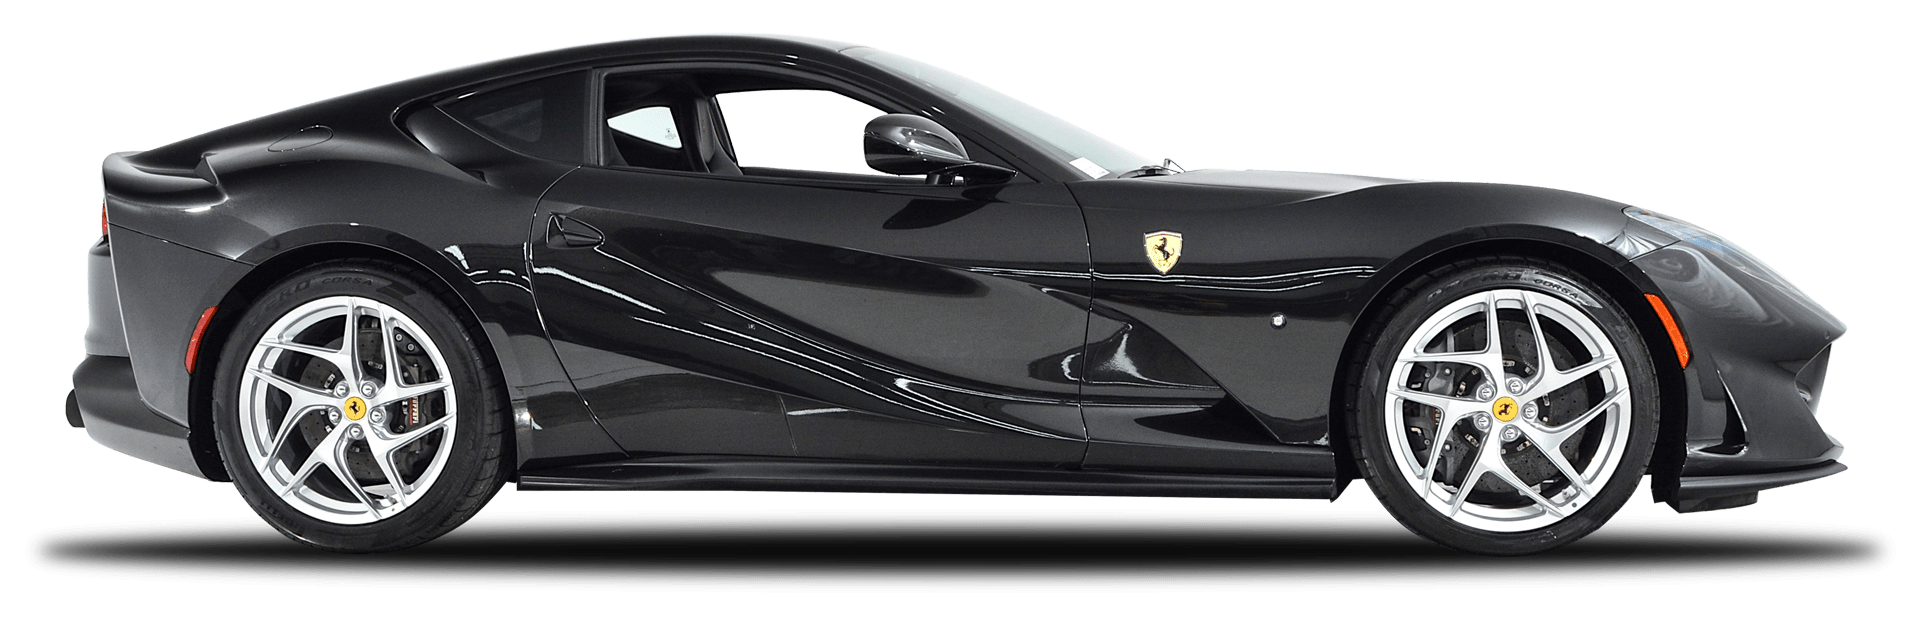 Ferrari Black Side View PNG Download Free PNG Image